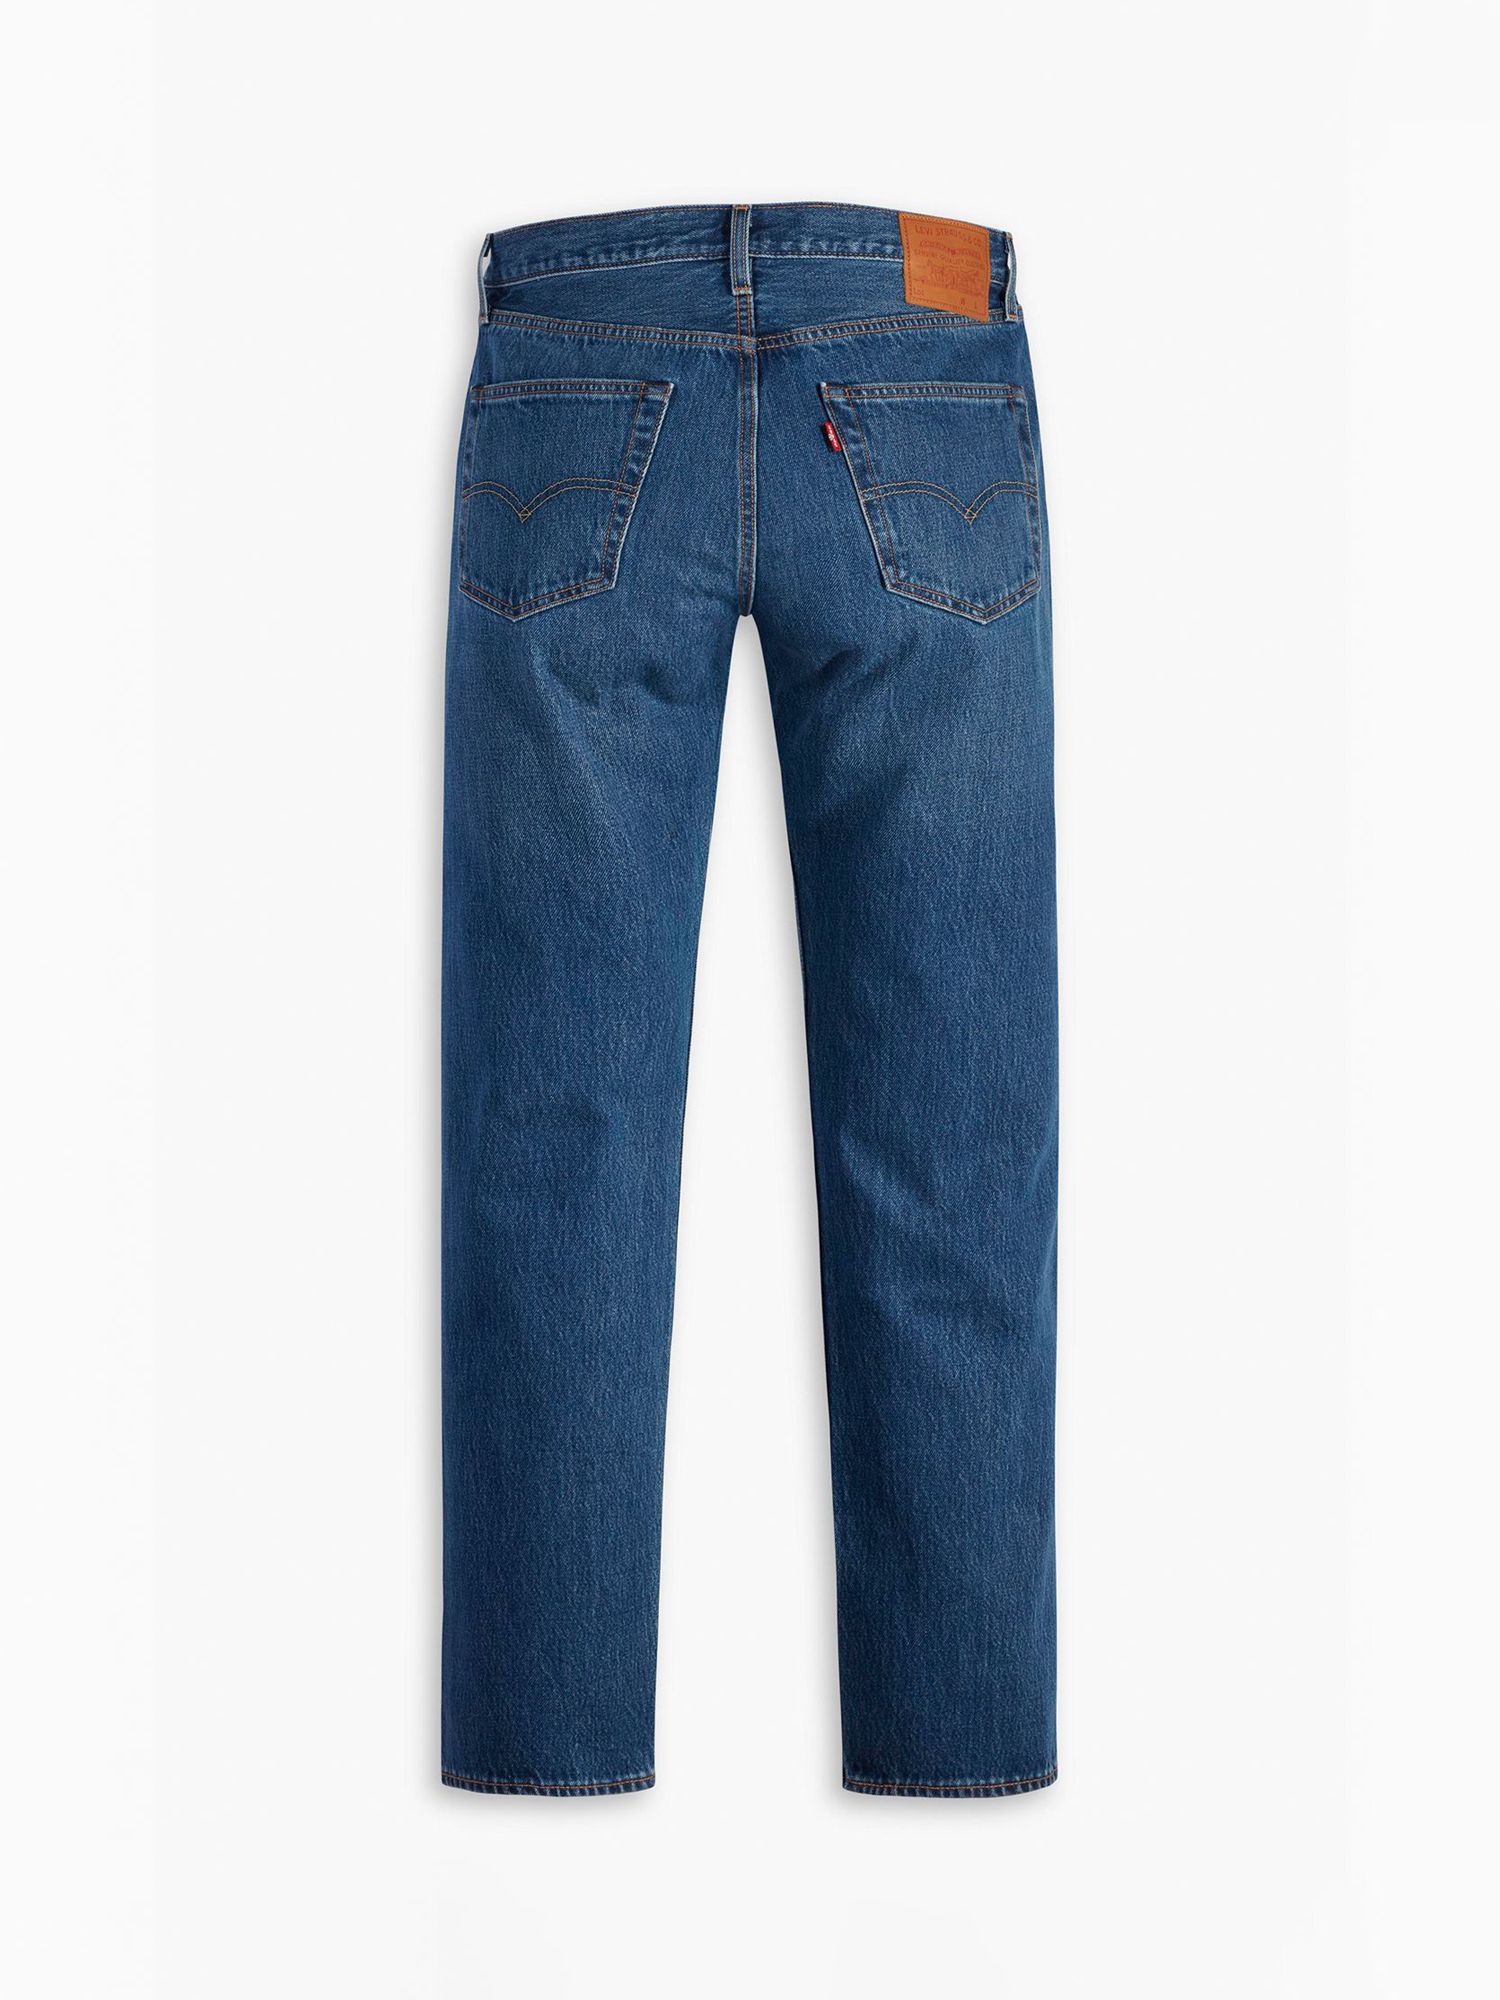 Buy Levi's 501 Original Straight Jeans Online at johnlewis.com